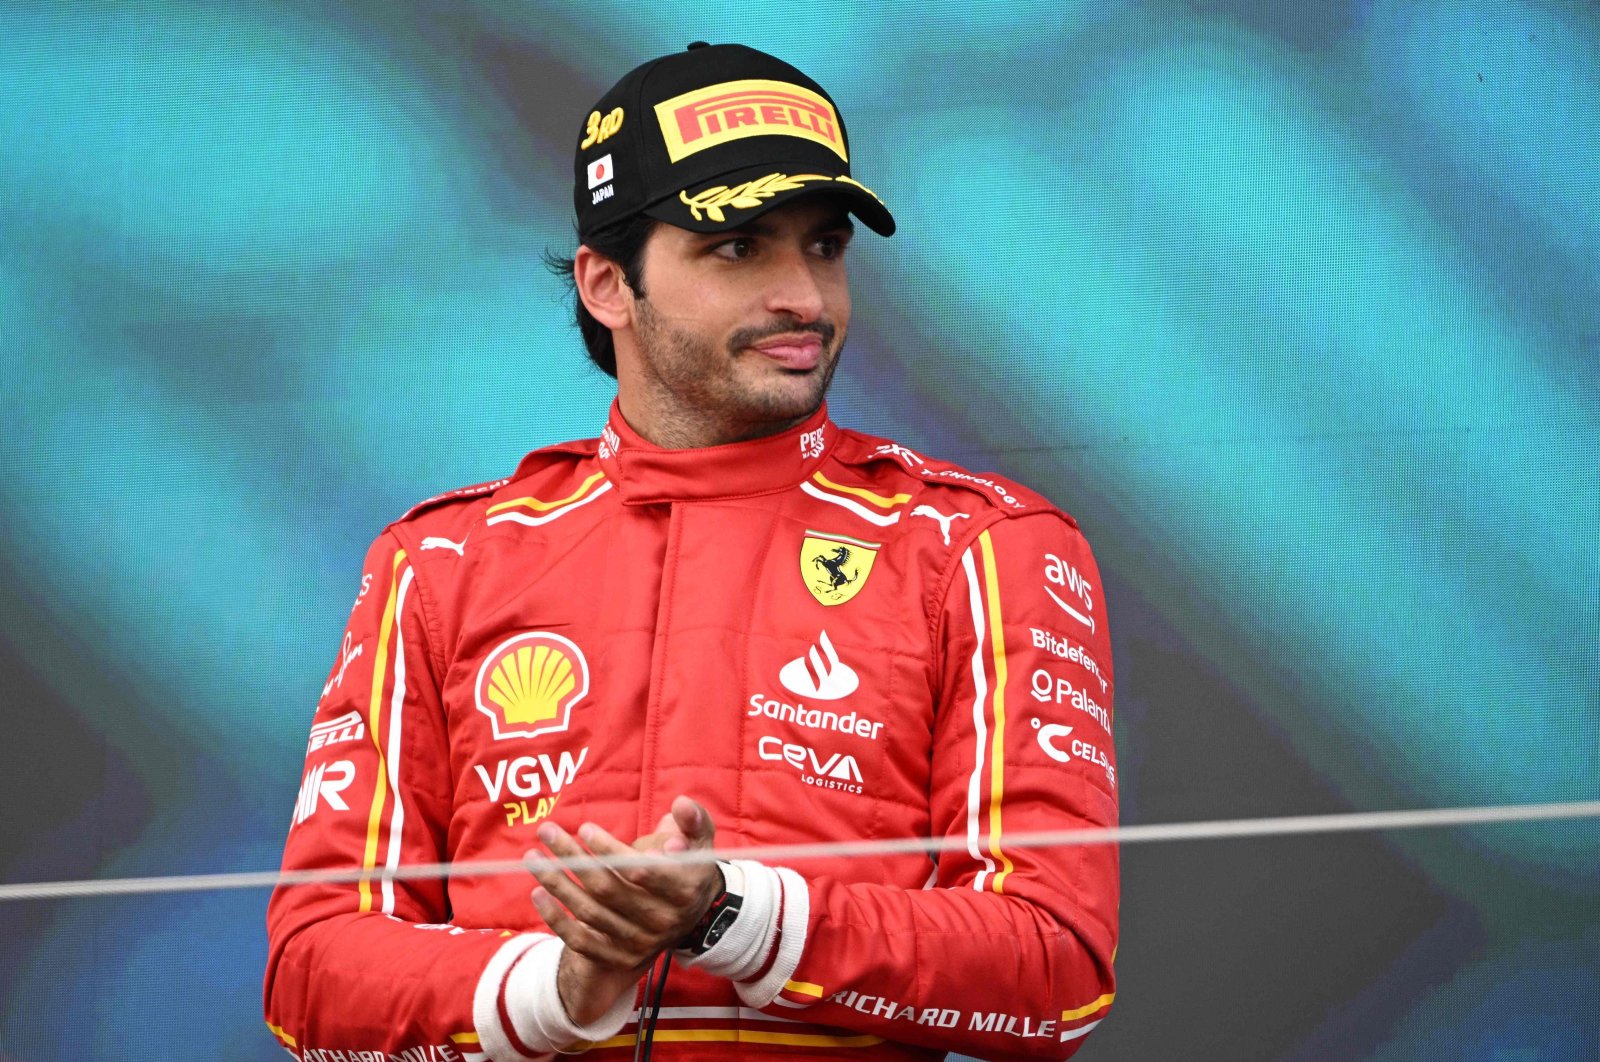 Unfazed Leclerc hails Sainz for outperforming in Ferrari F1 battle